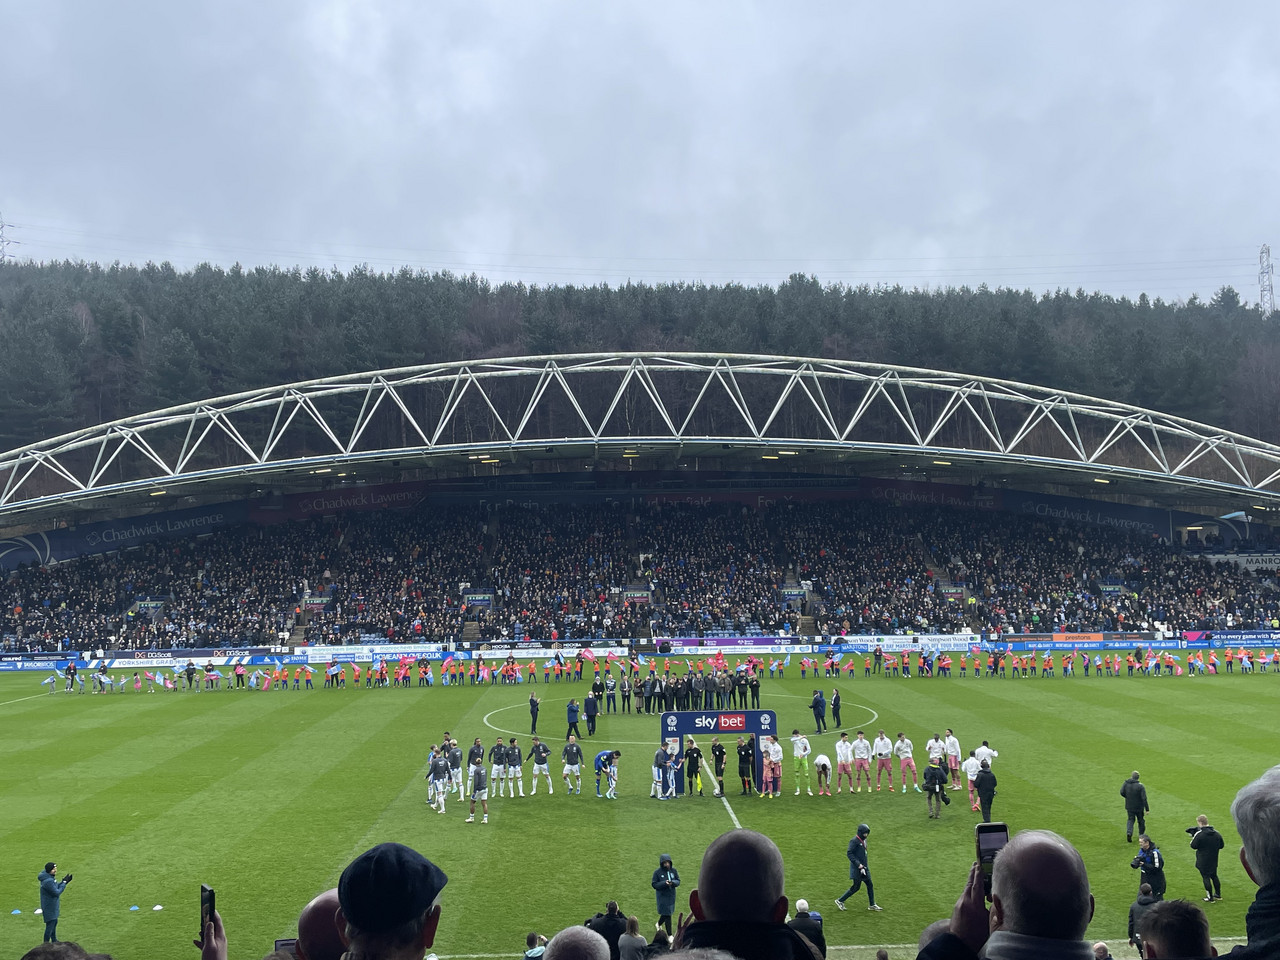 Huddersfield Town 1-1 Leeds United: Patrick Bamford saves Leeds